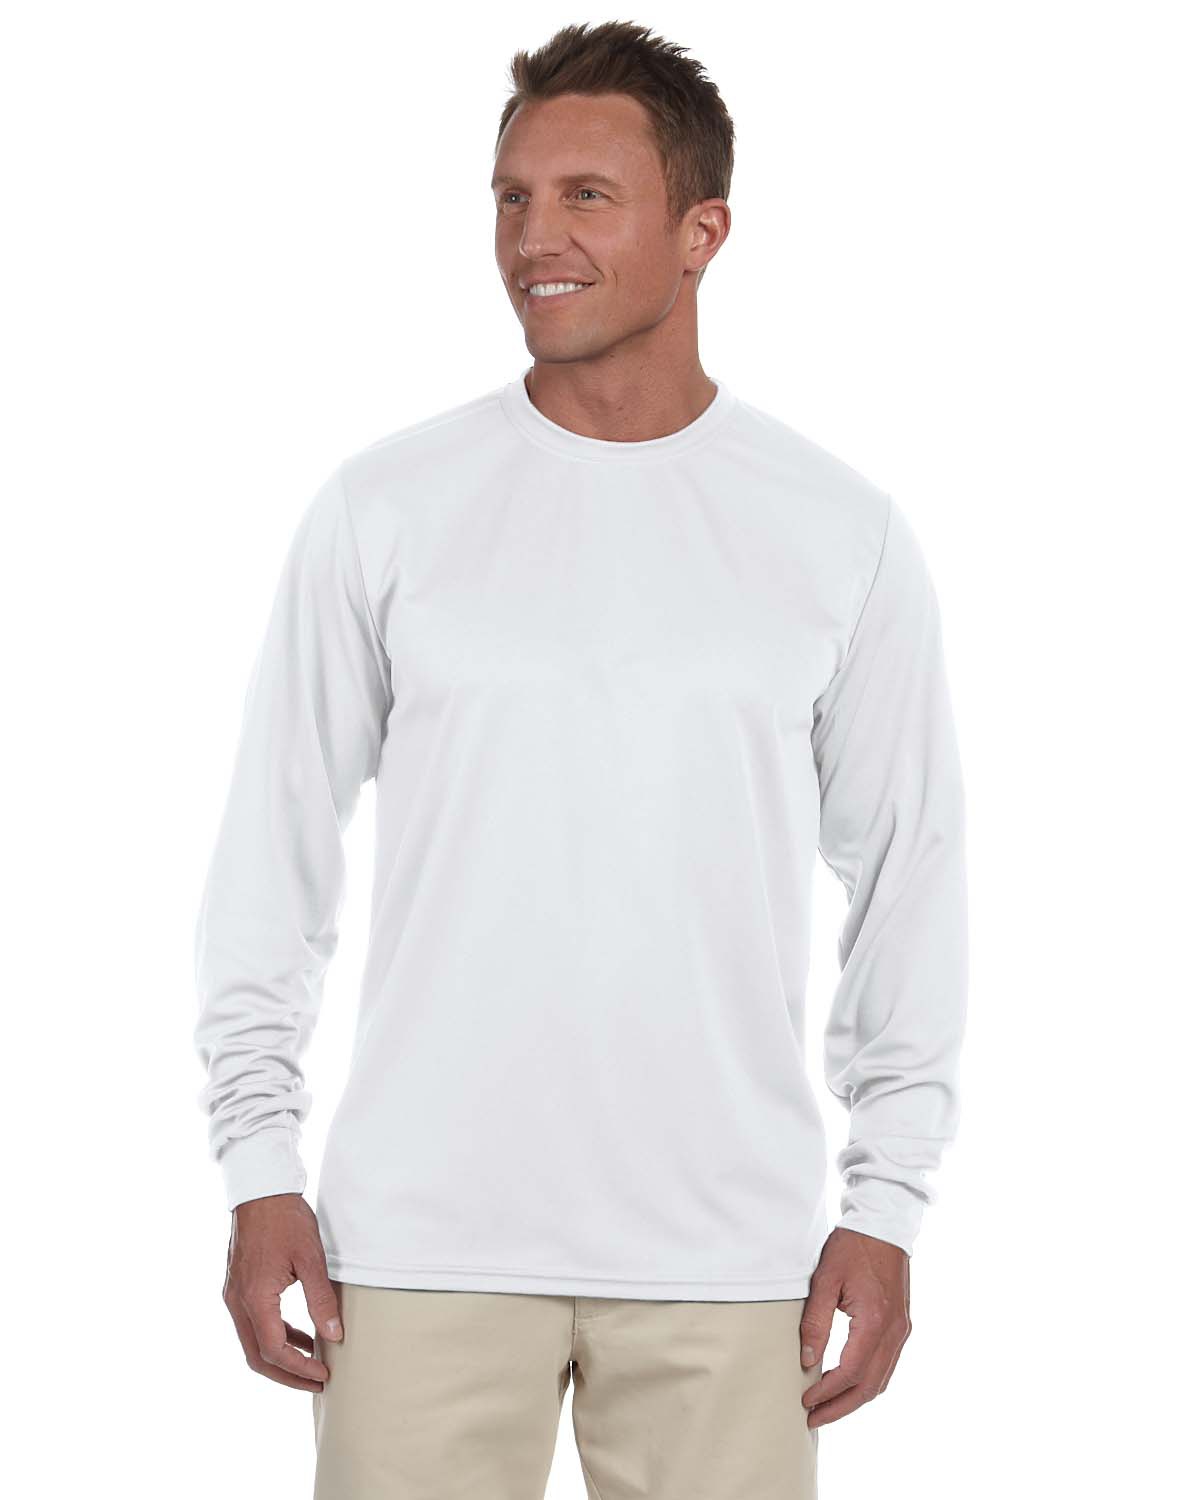 'Augusta Sportswear 788 Adult Wicking Long Sleeve T-Shirt'